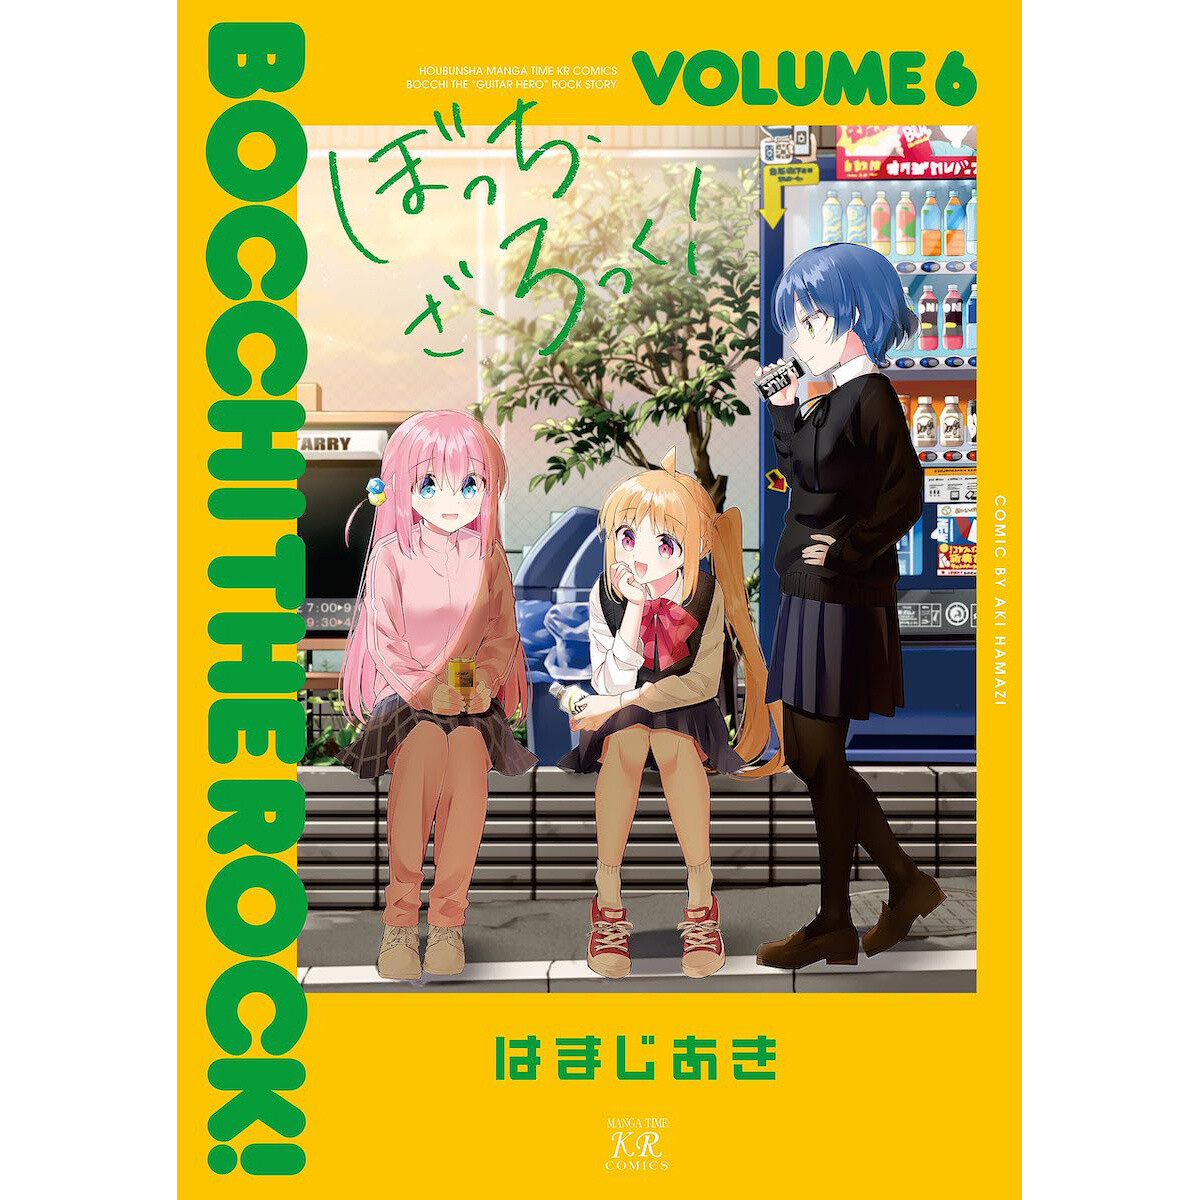 volume 5  Dvd, Anime, Chi chi